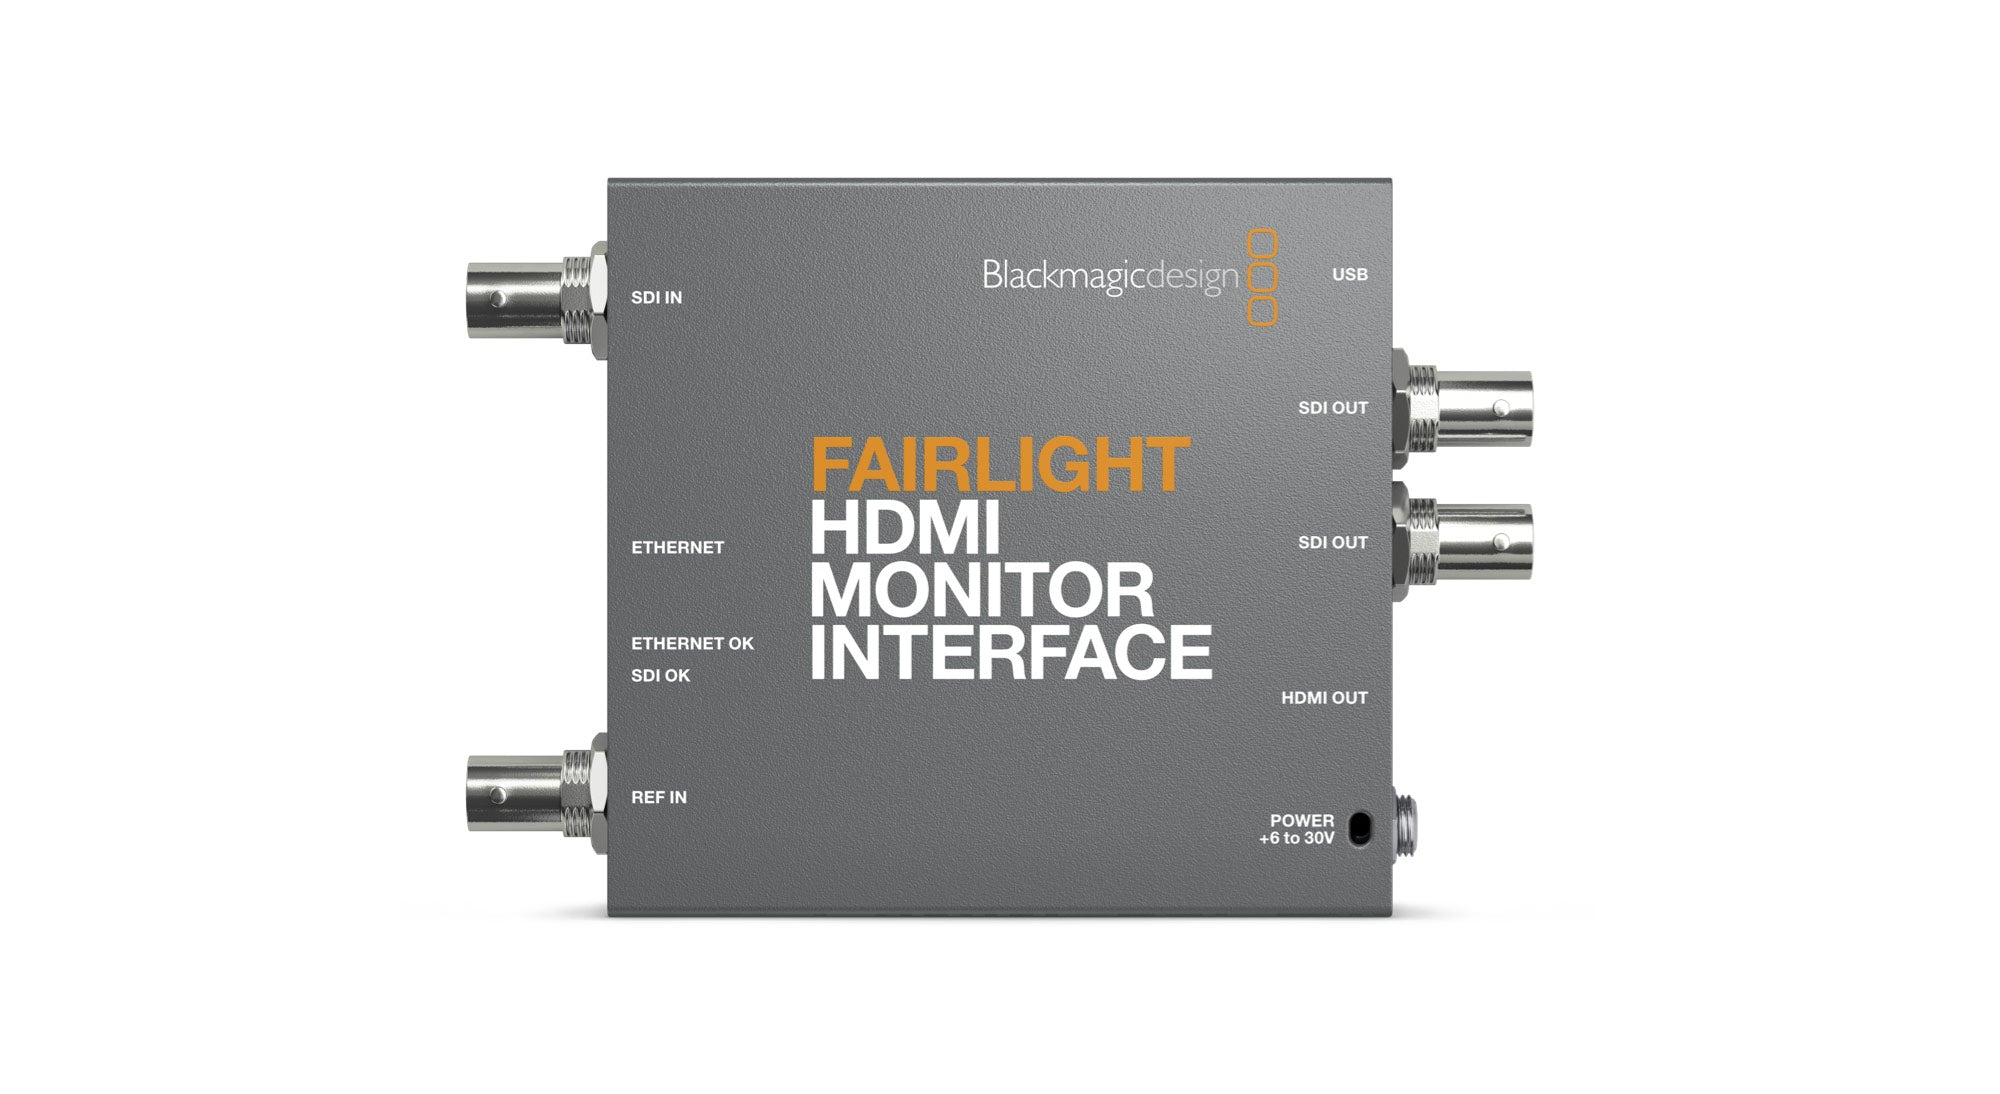 Fairlight HDMI Monitor Interface